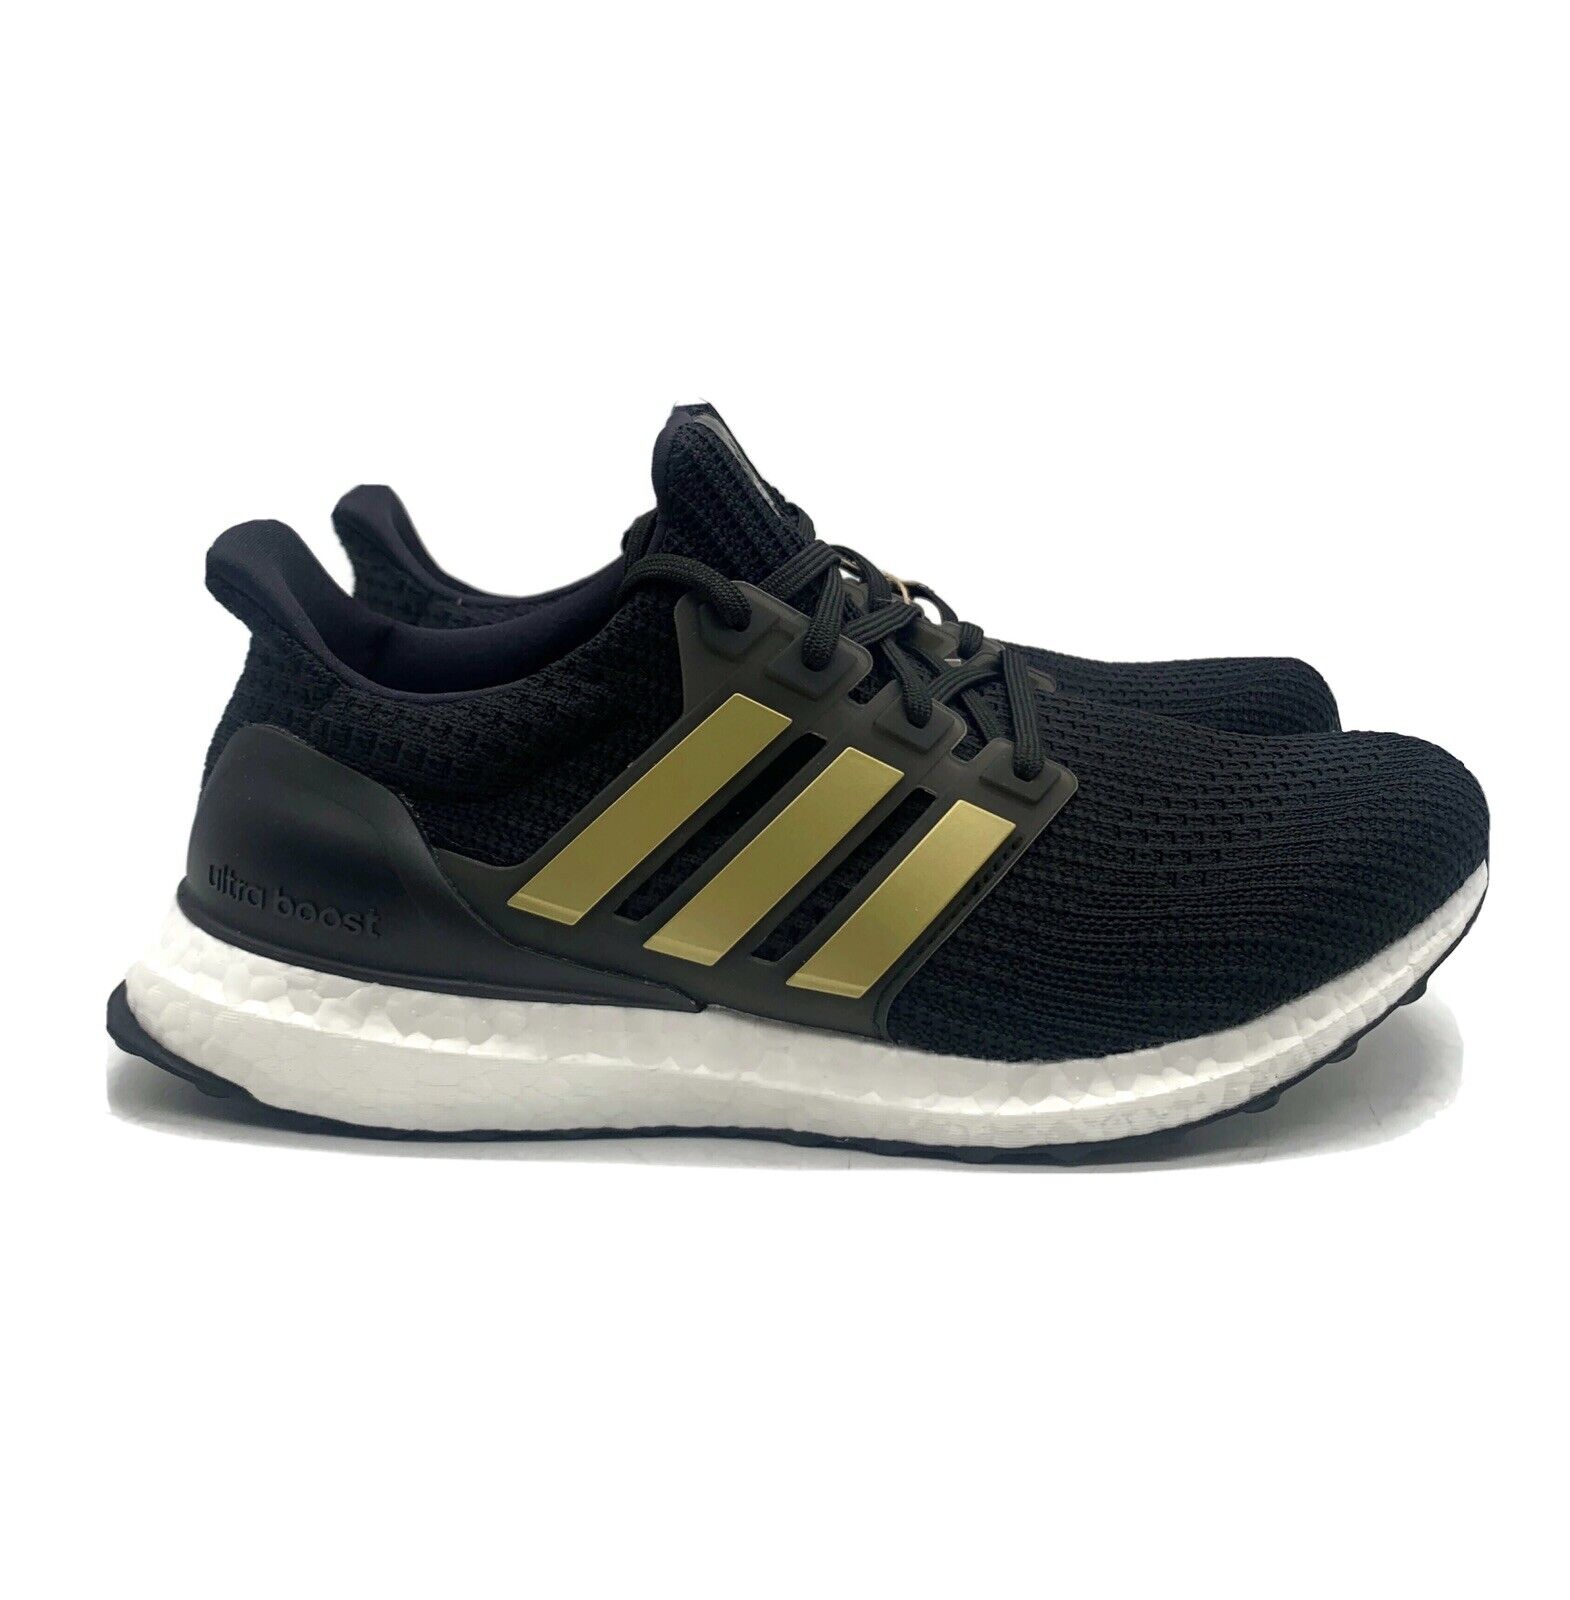 Adidas Ultraboost 4.0 DNA (Mens Size 10) Running Shoe Black Training Gym Sneaker